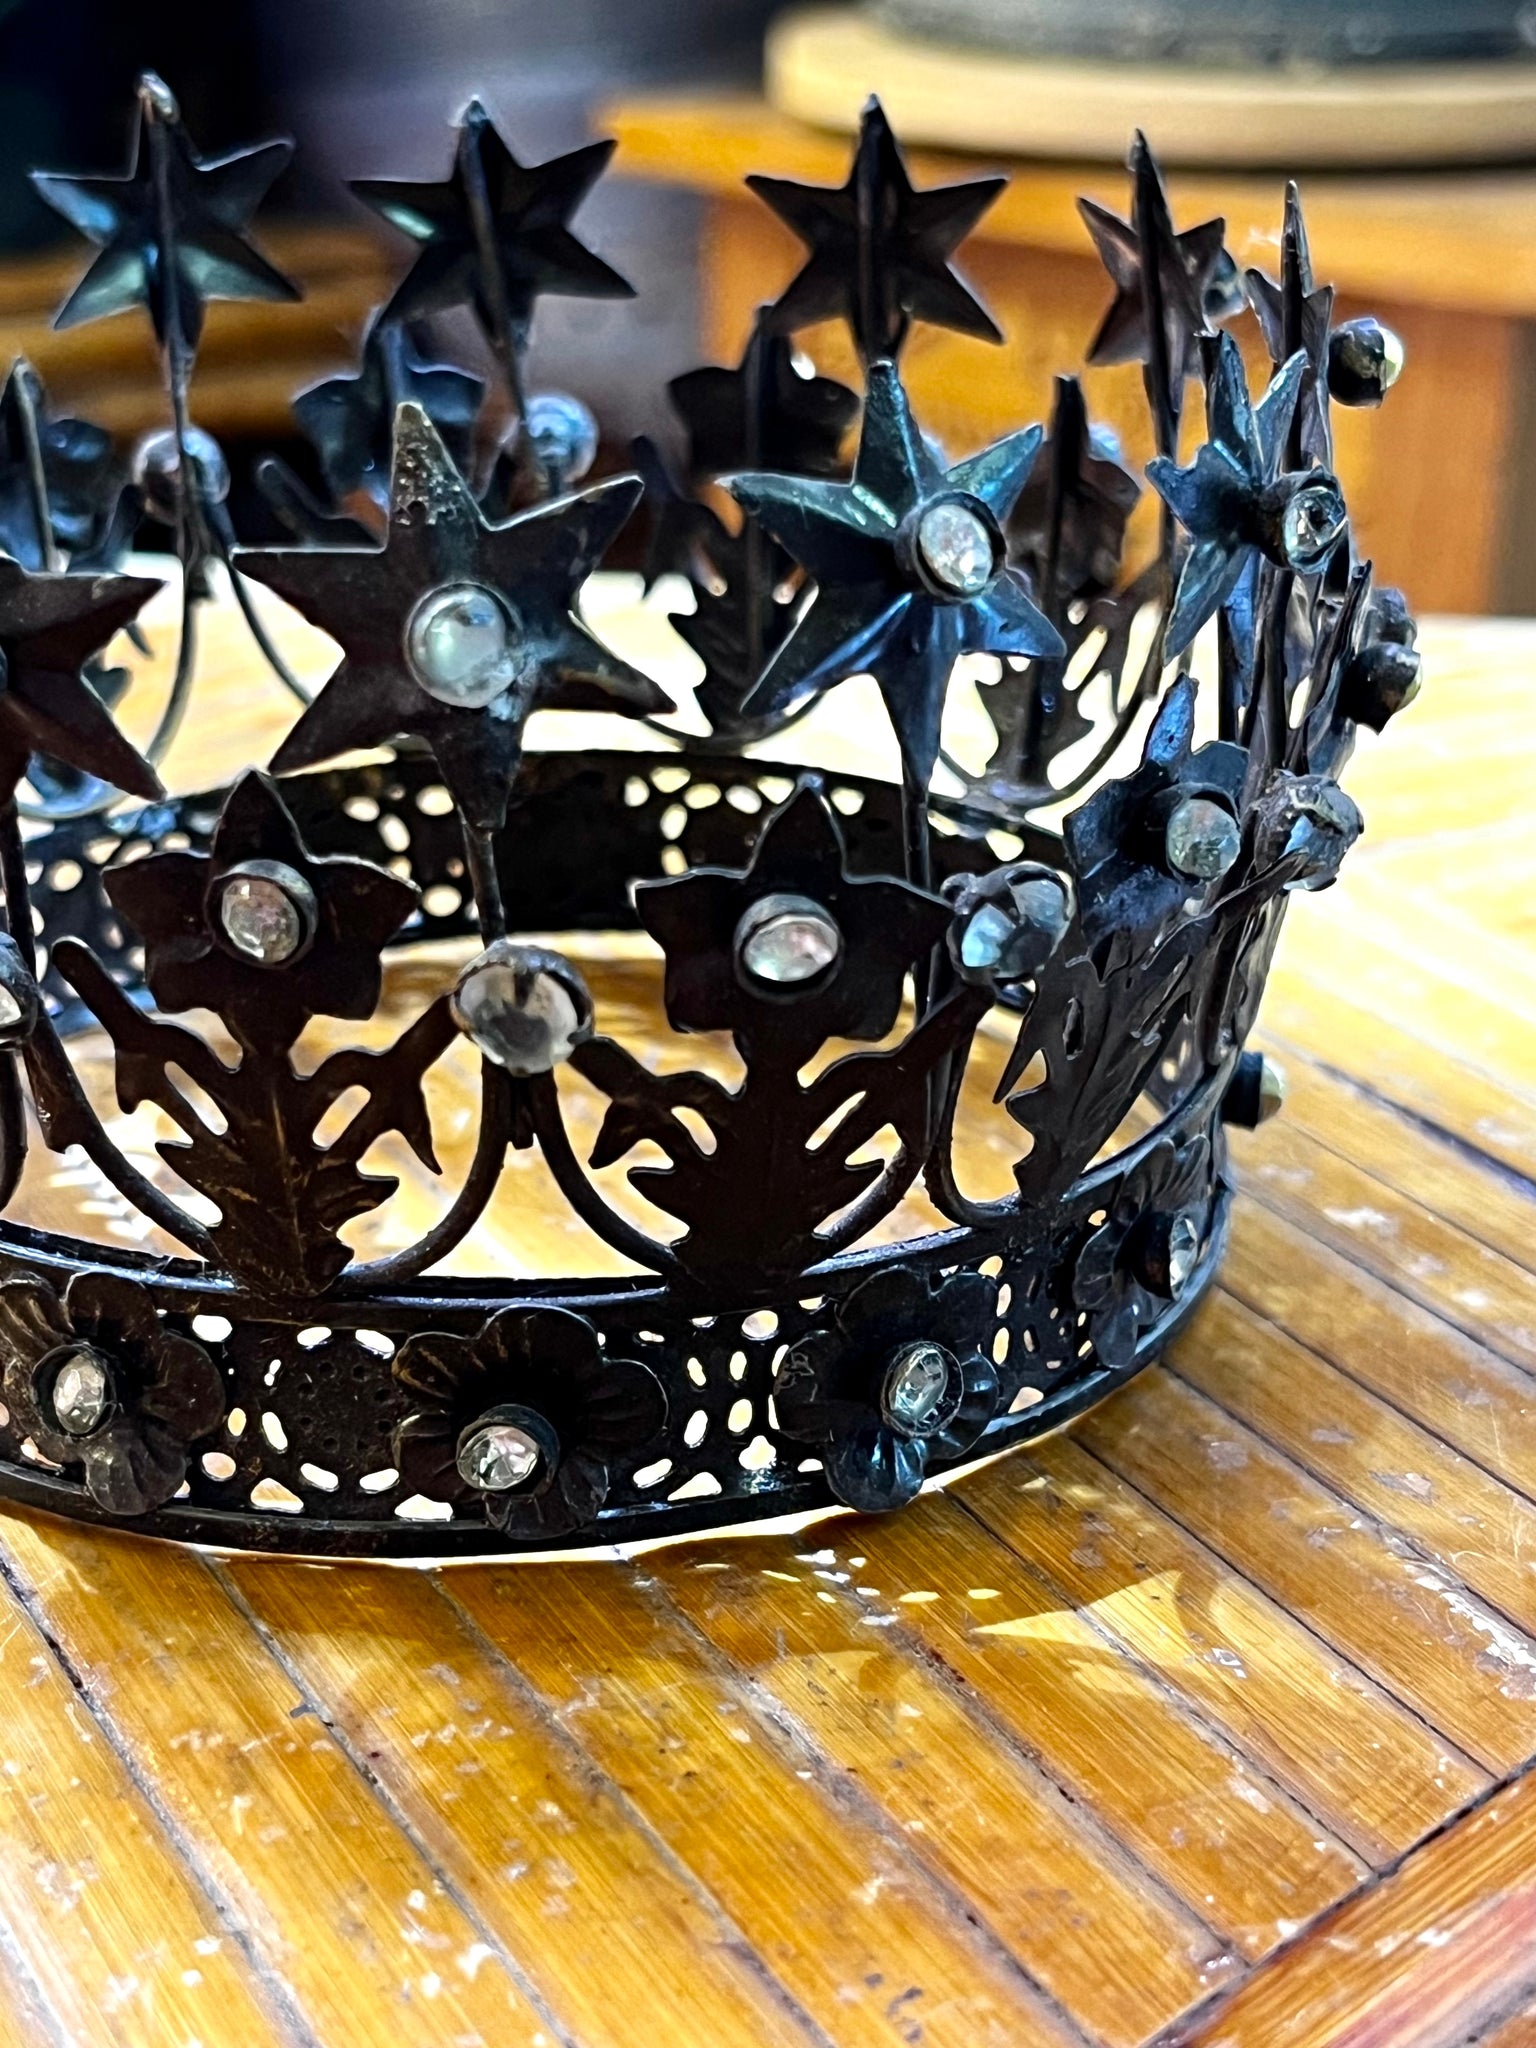 Jeweled Crown